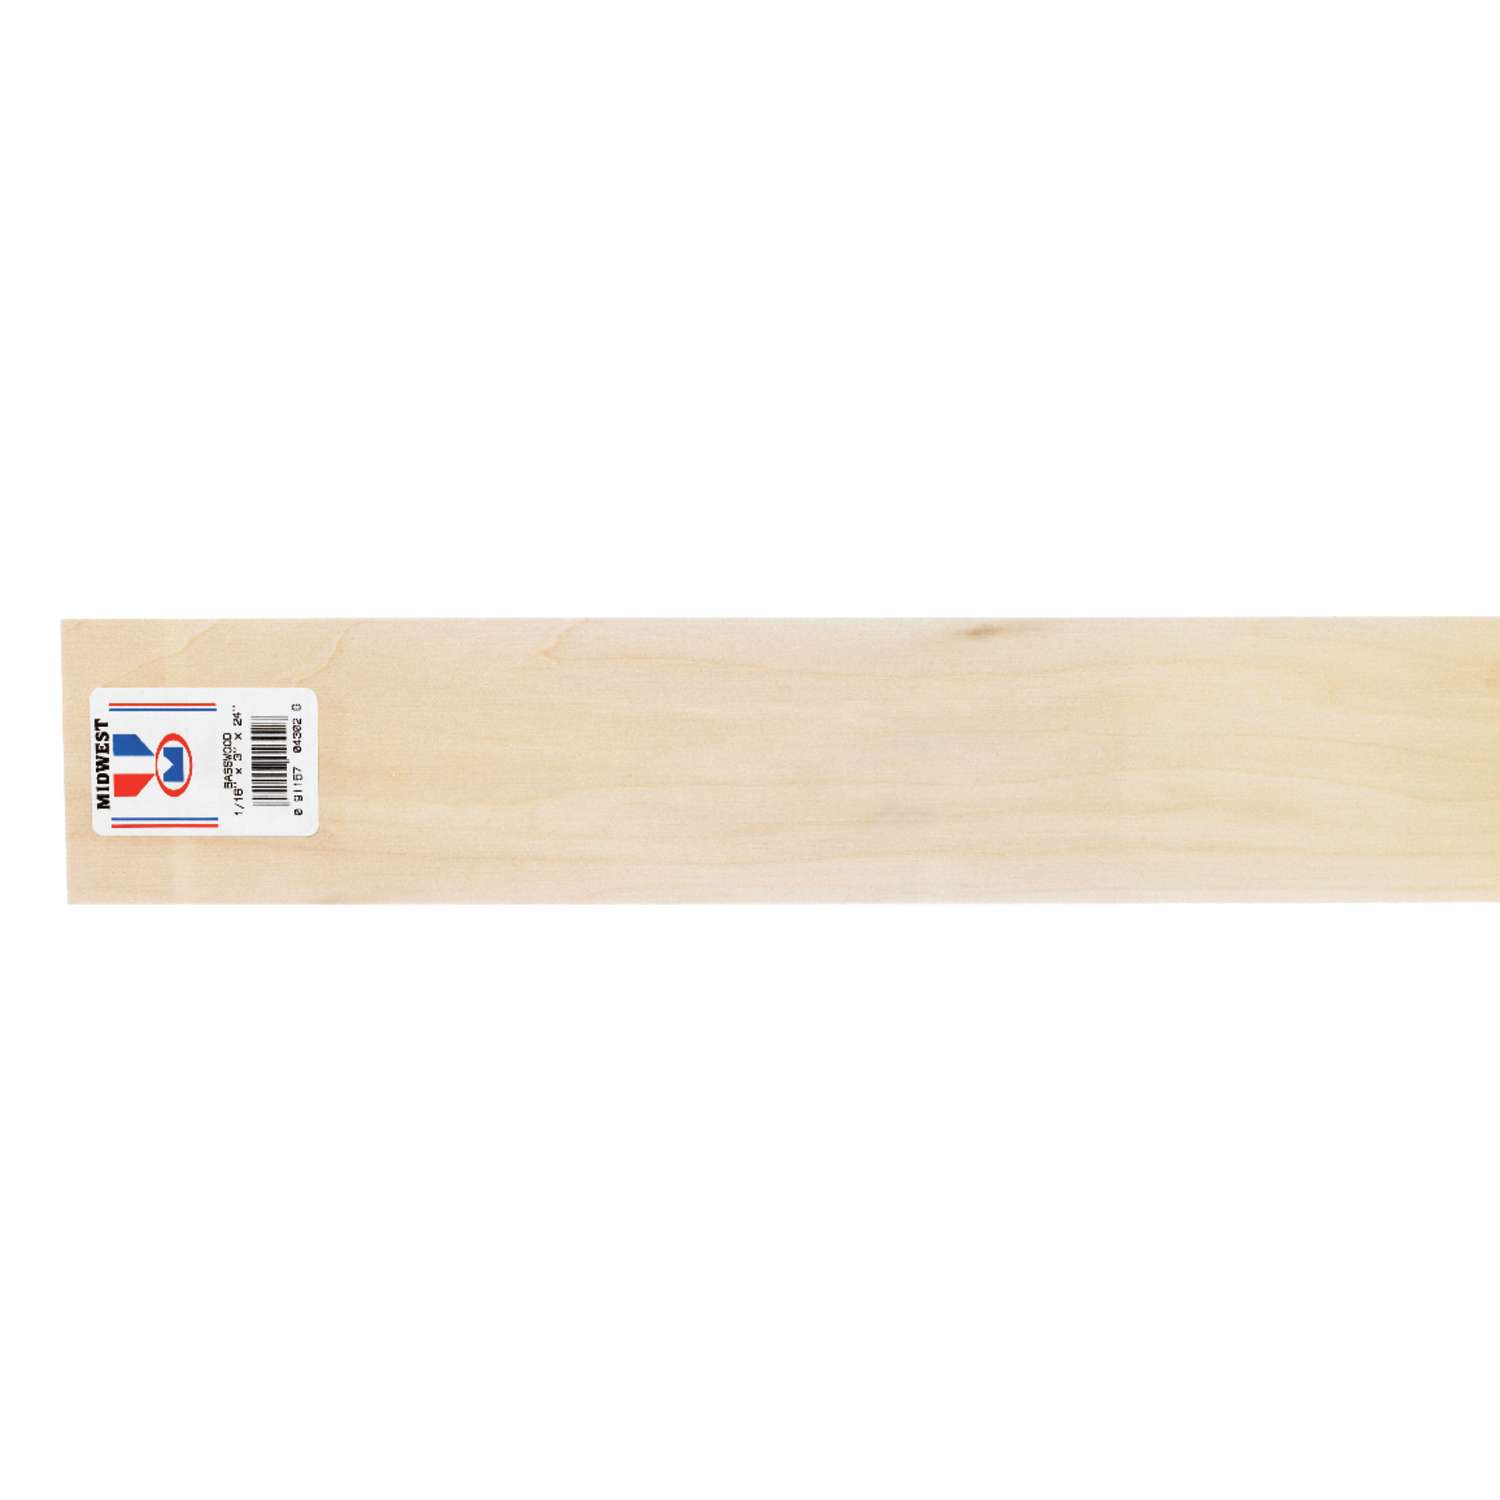 1/16 x 1/8 x 24 Basswood Stick – Balsa USA